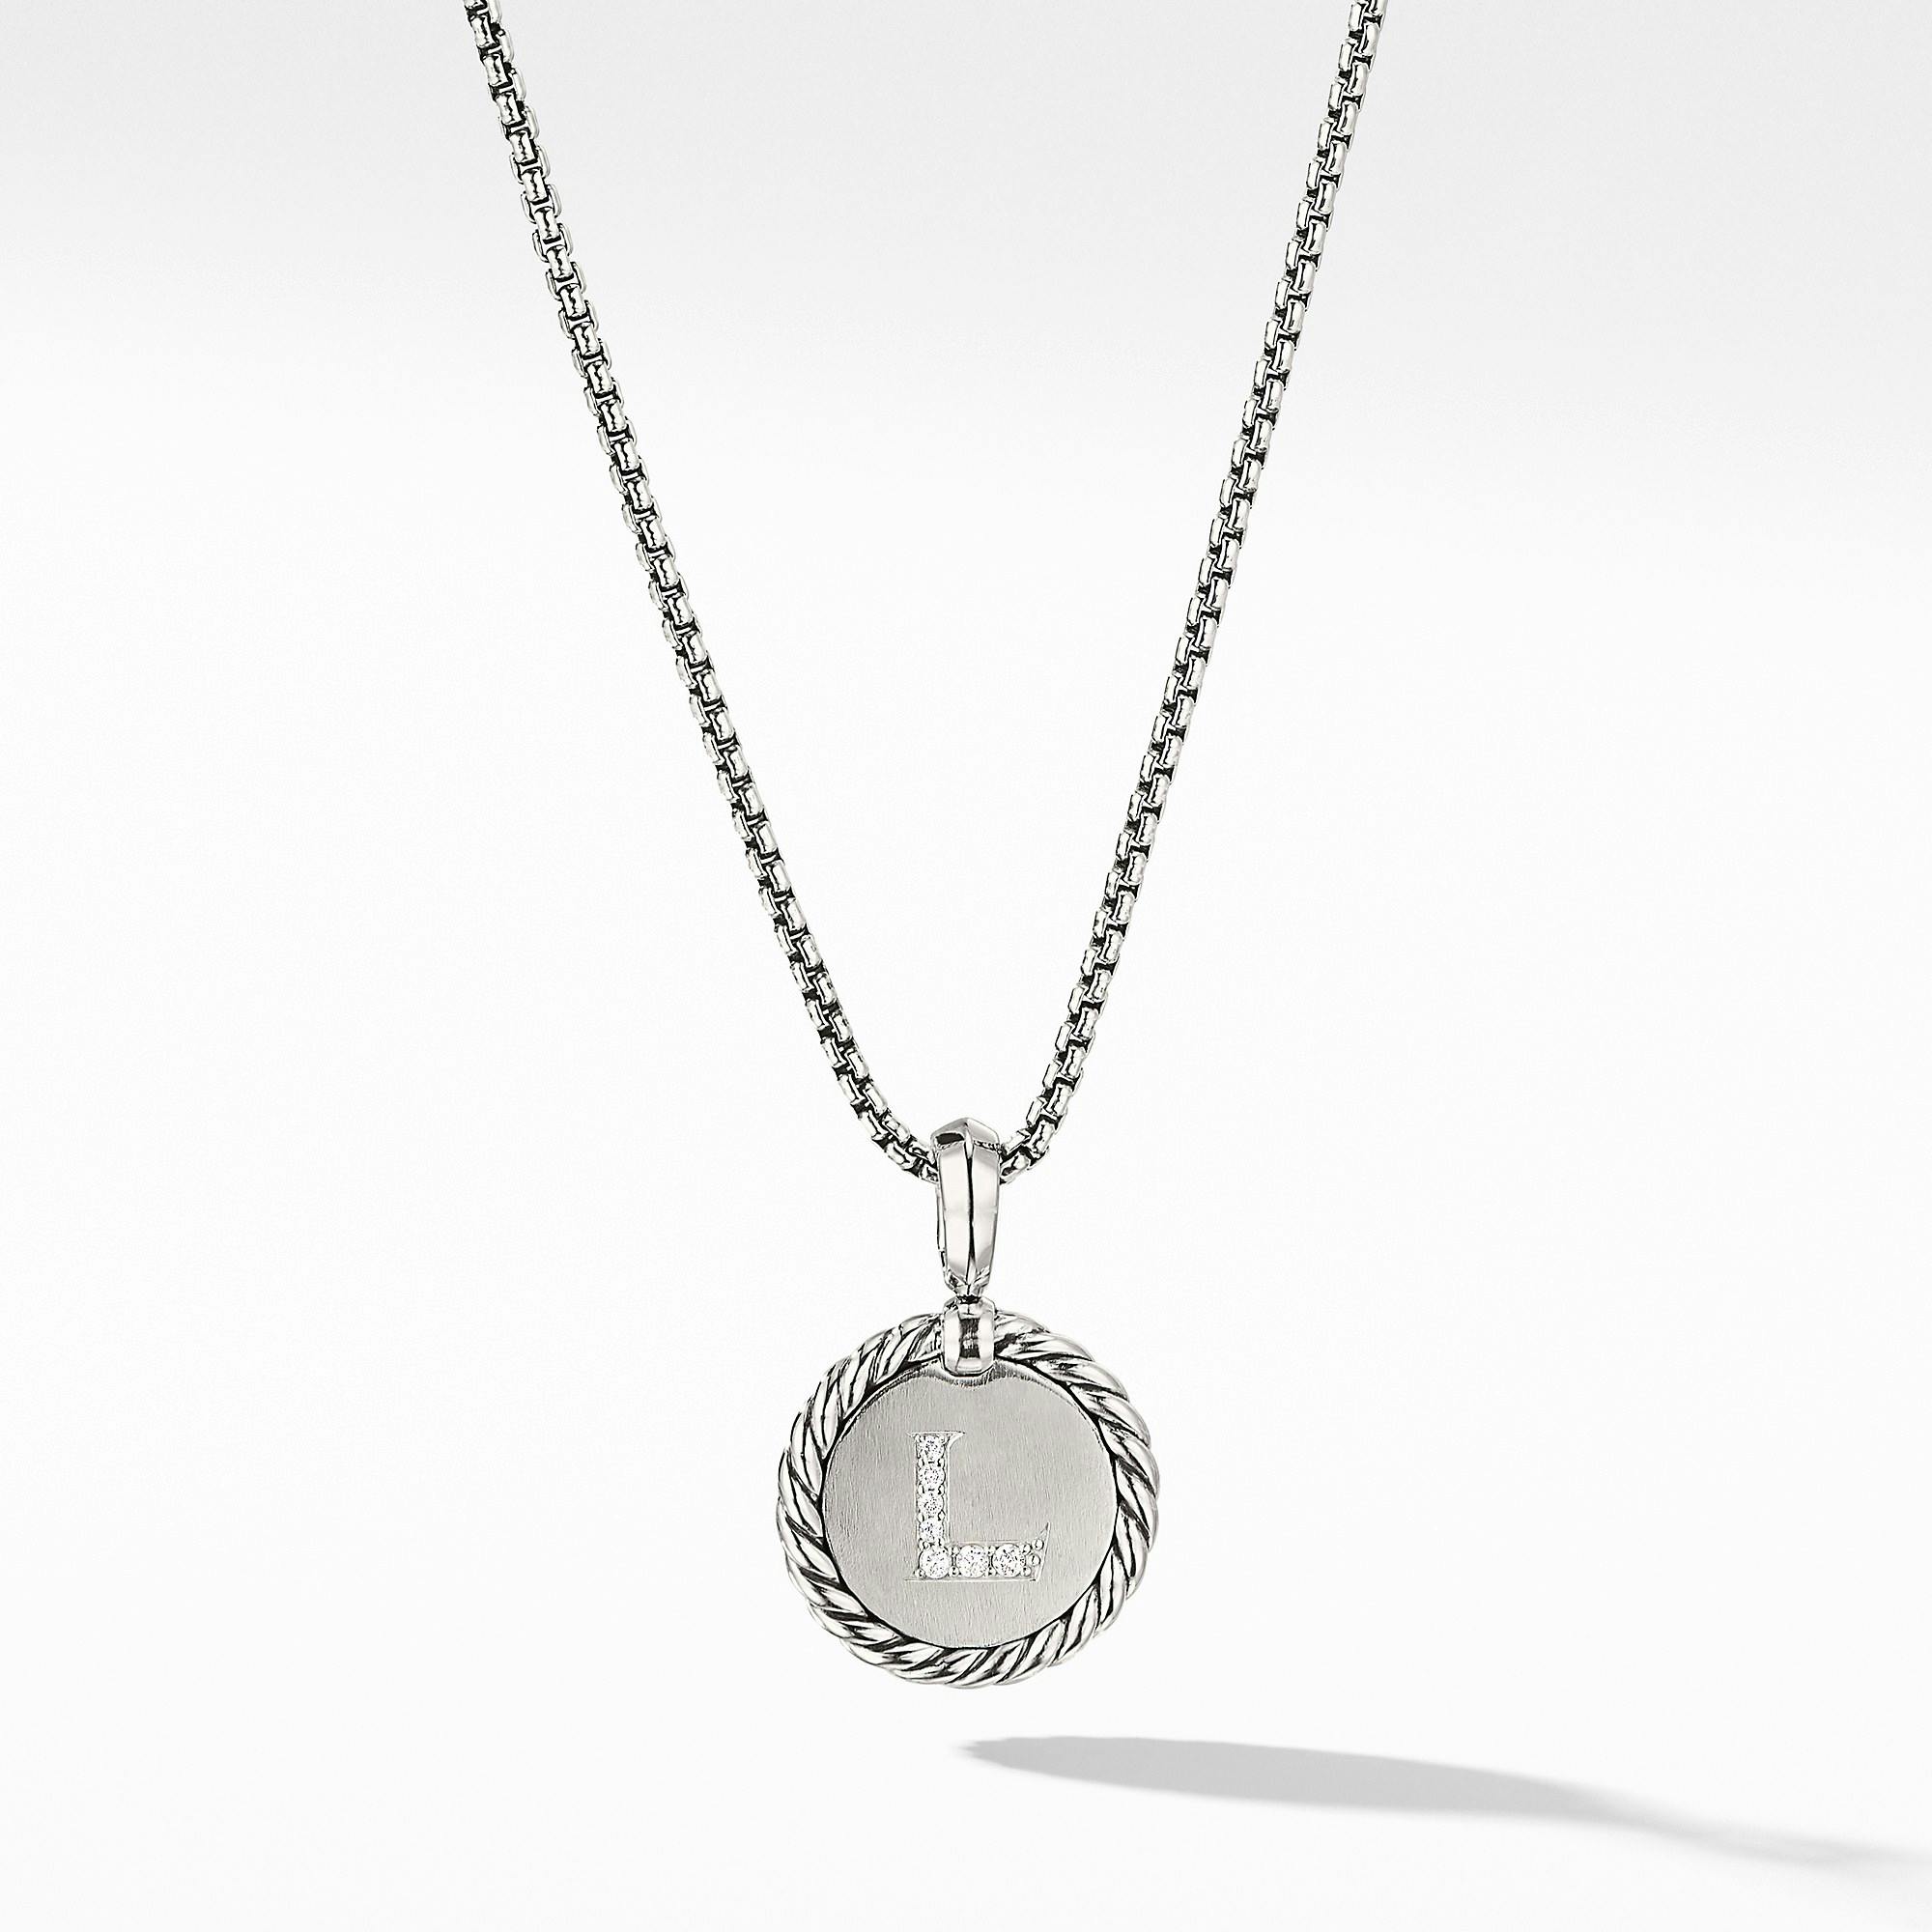 David Yurman "L" initial Charm Necklace with Diamonds